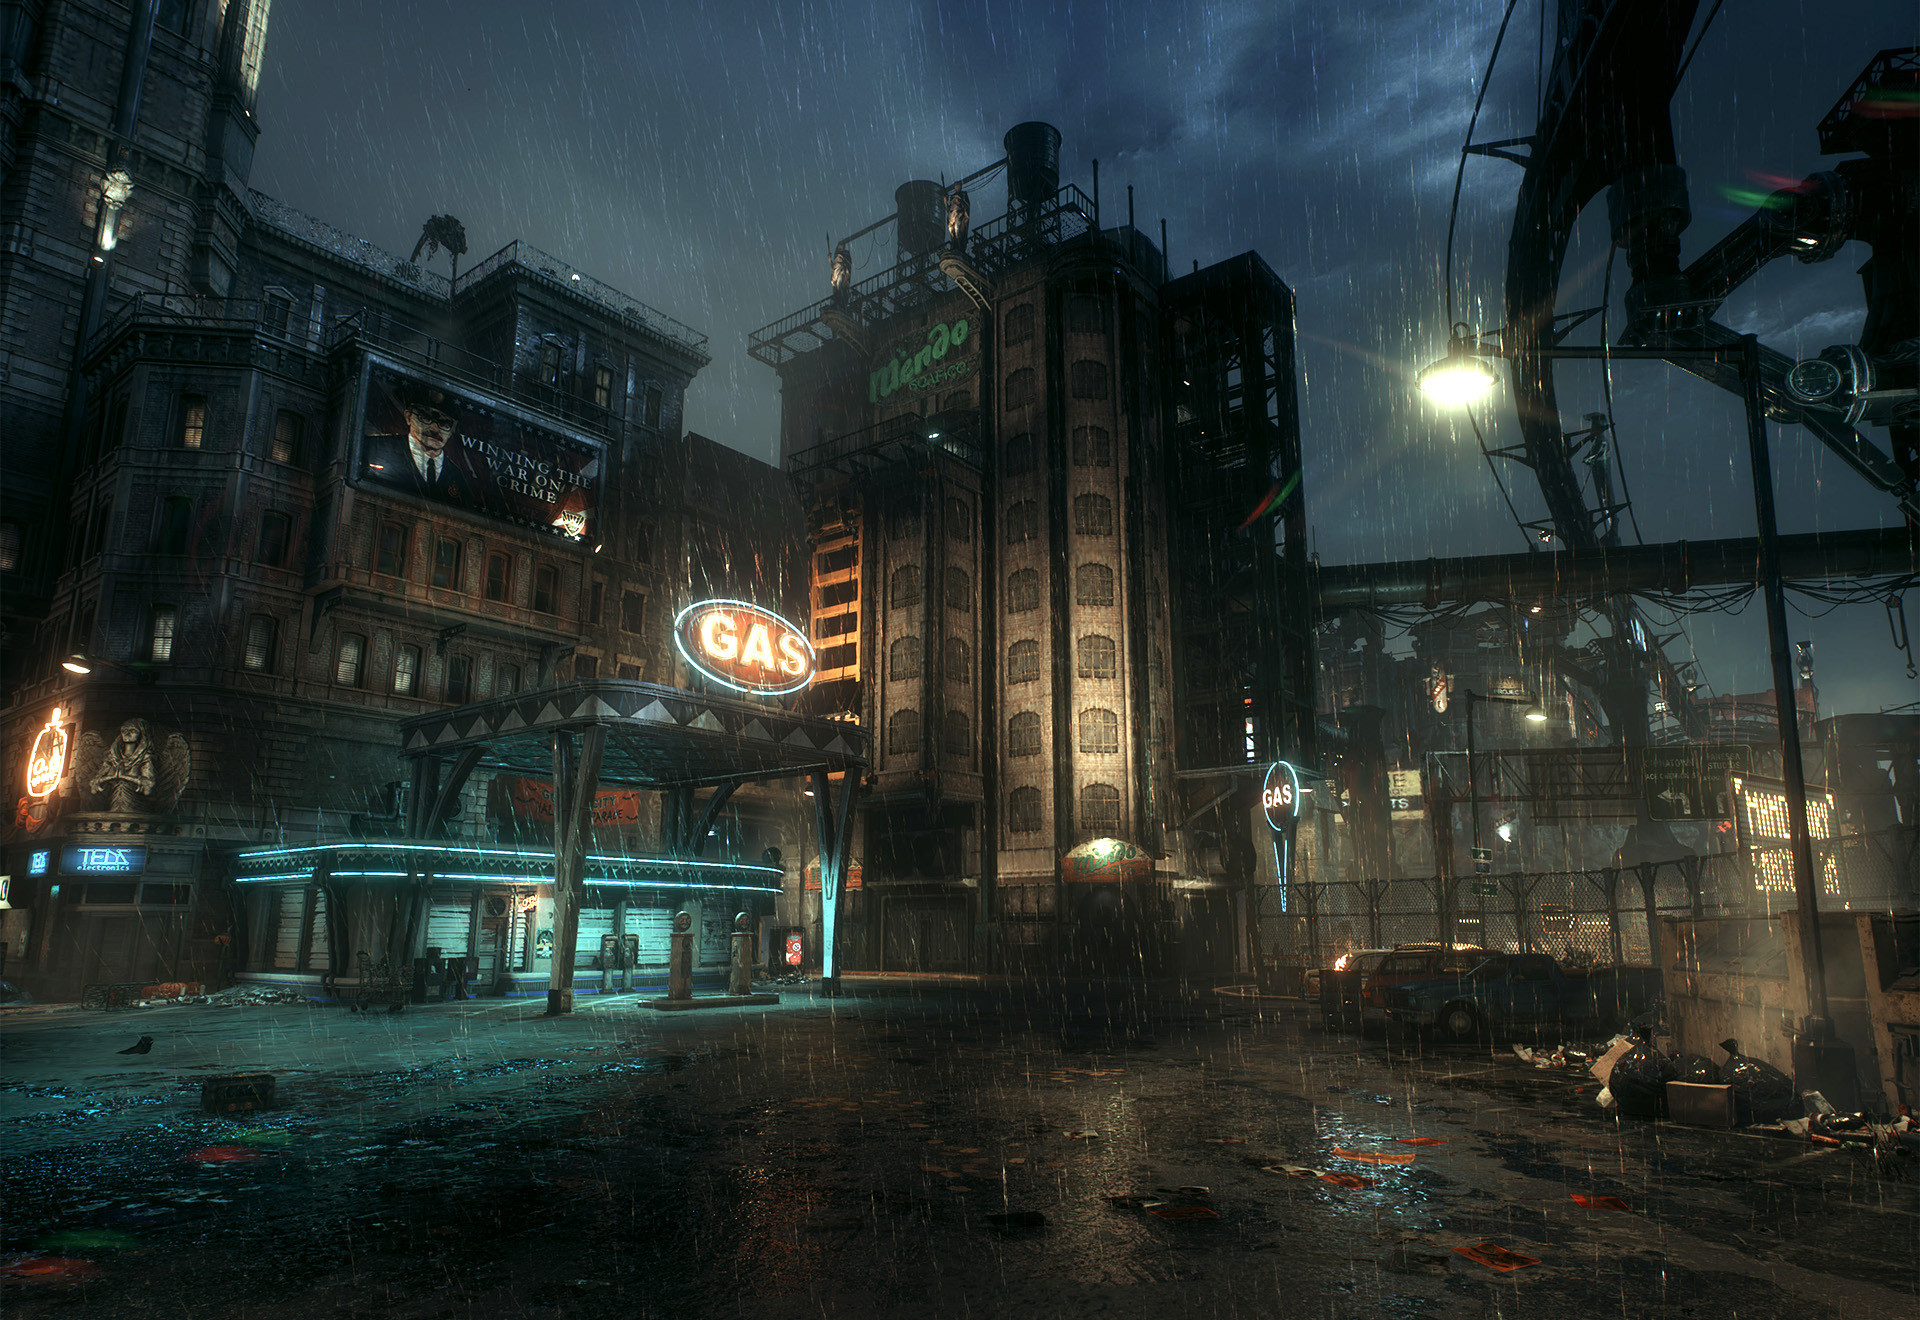 Steam Workshop::Batman Arkham Knight - Batman Overlooking Gotham